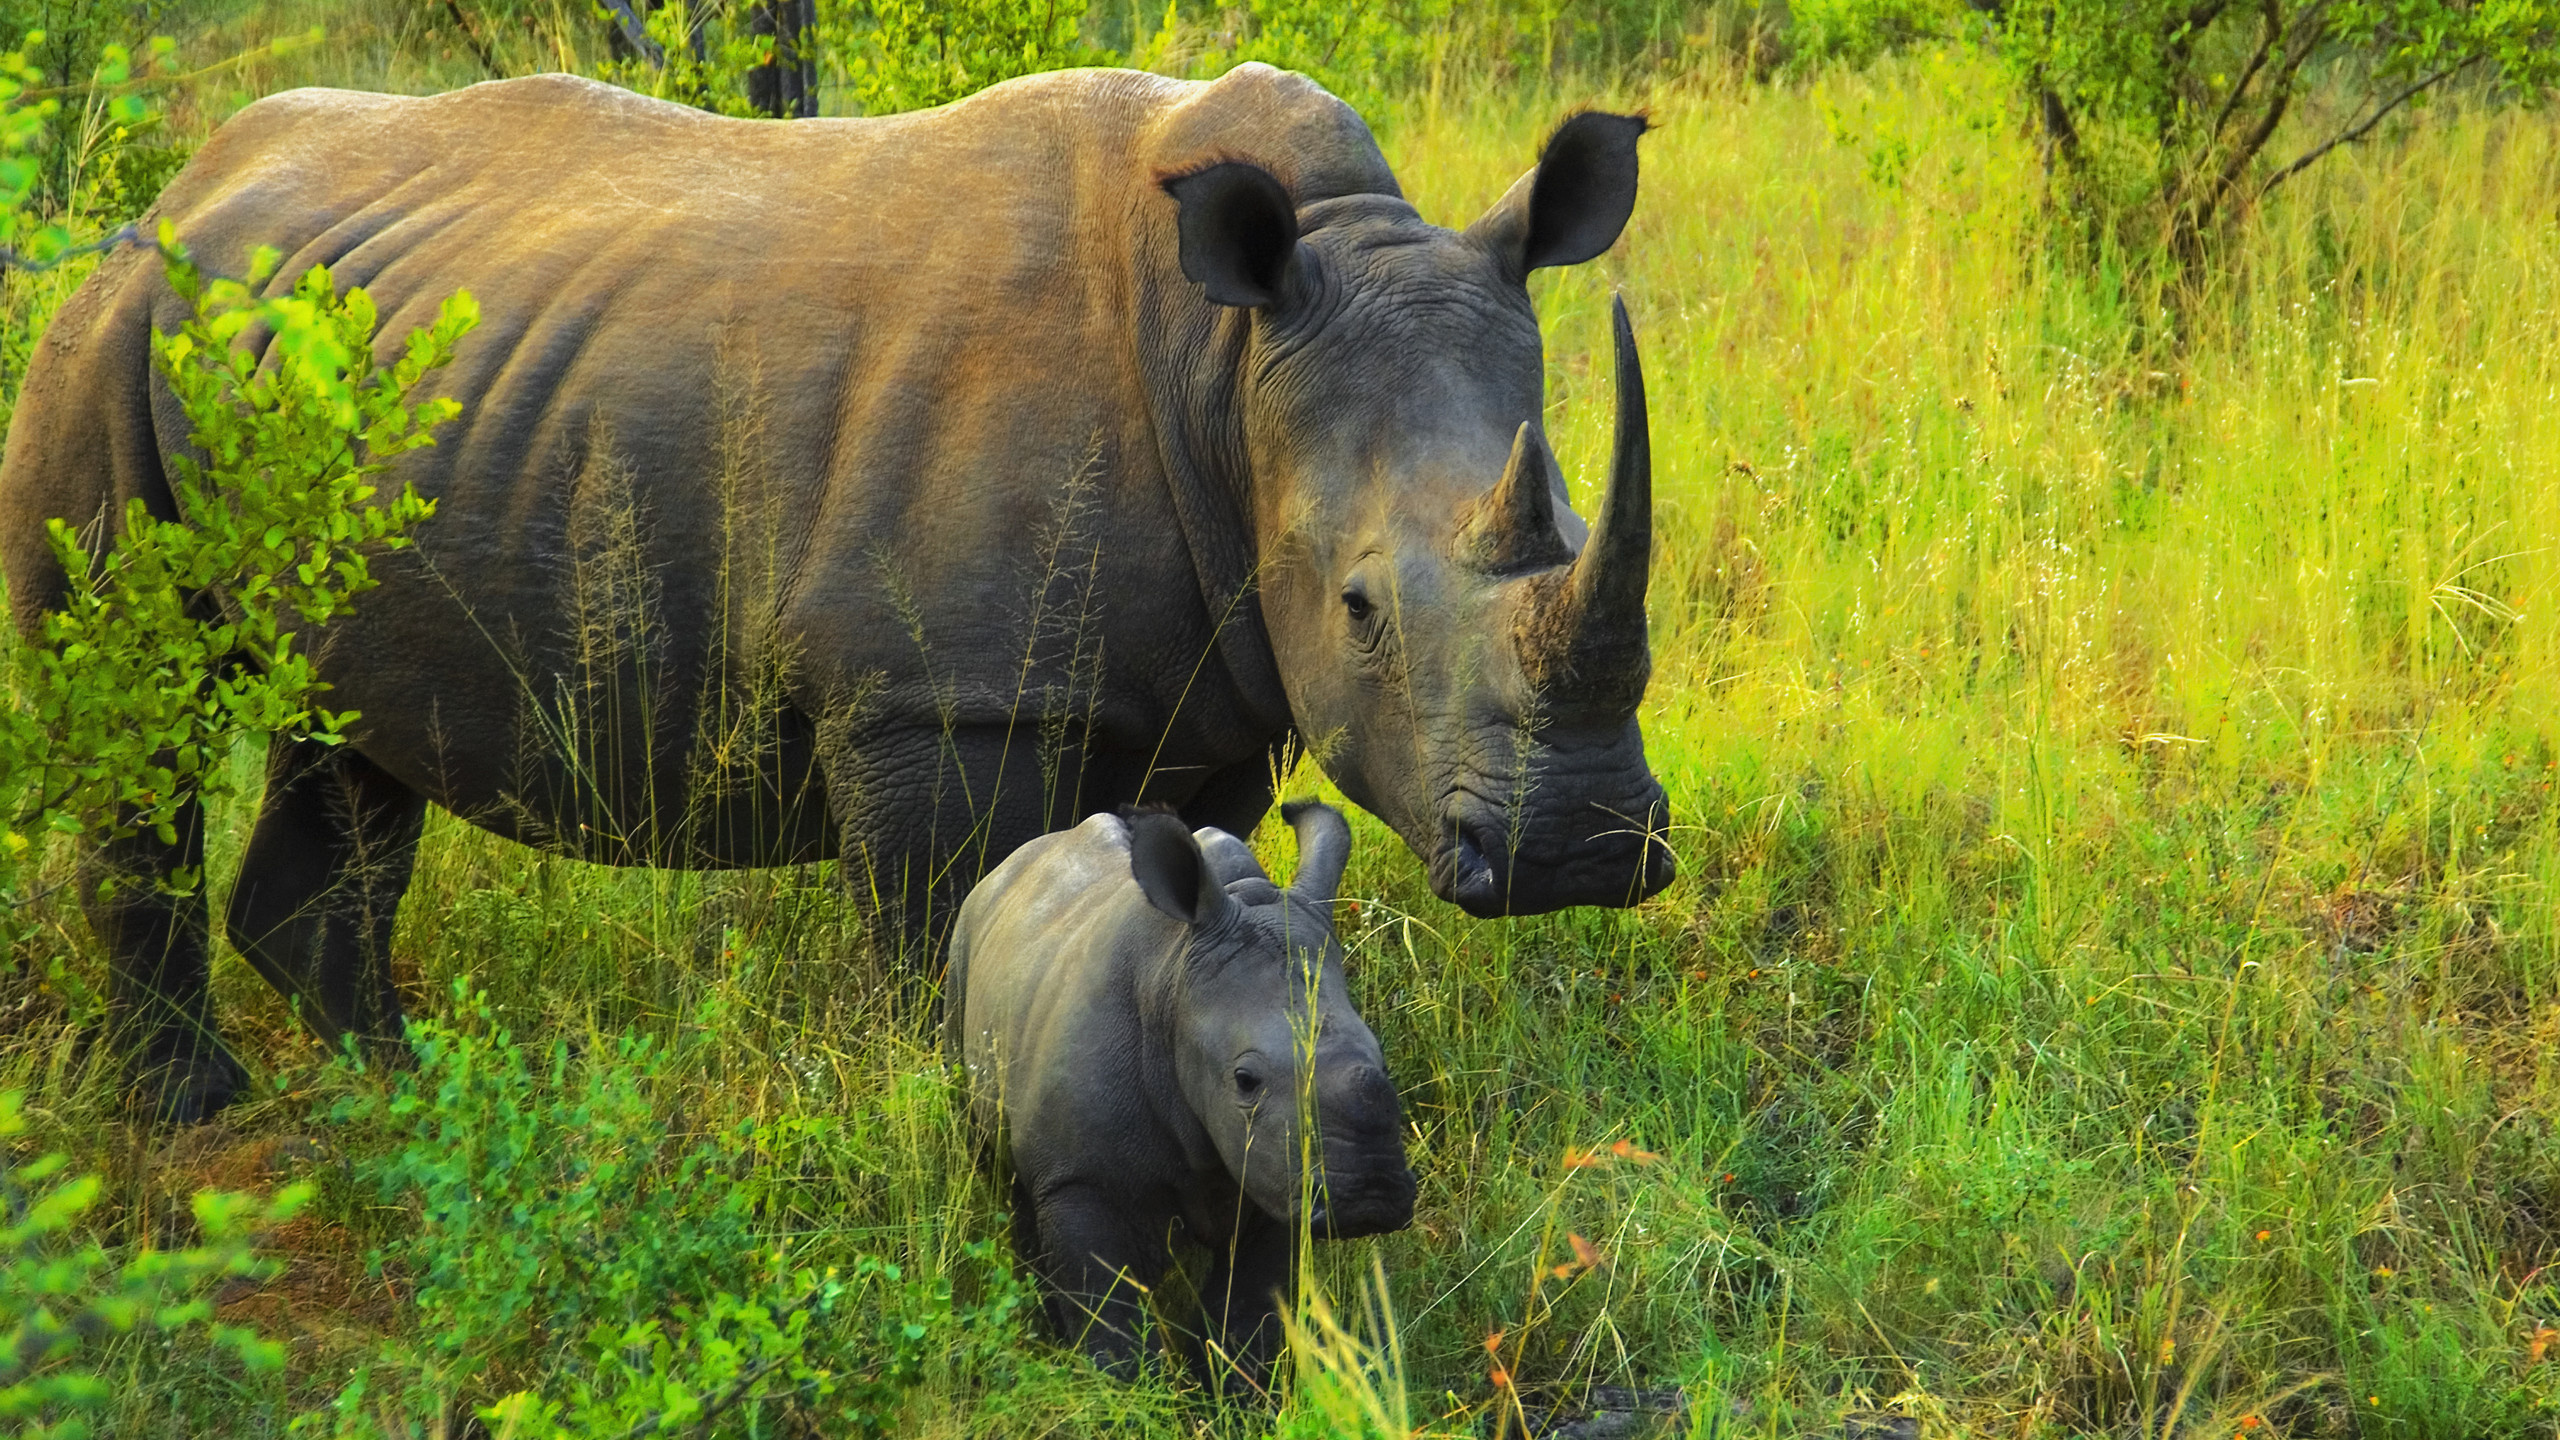 Black Rhinoceros on Green Grass Field During Daytime. Wallpaper in 2560x1440 Resolution